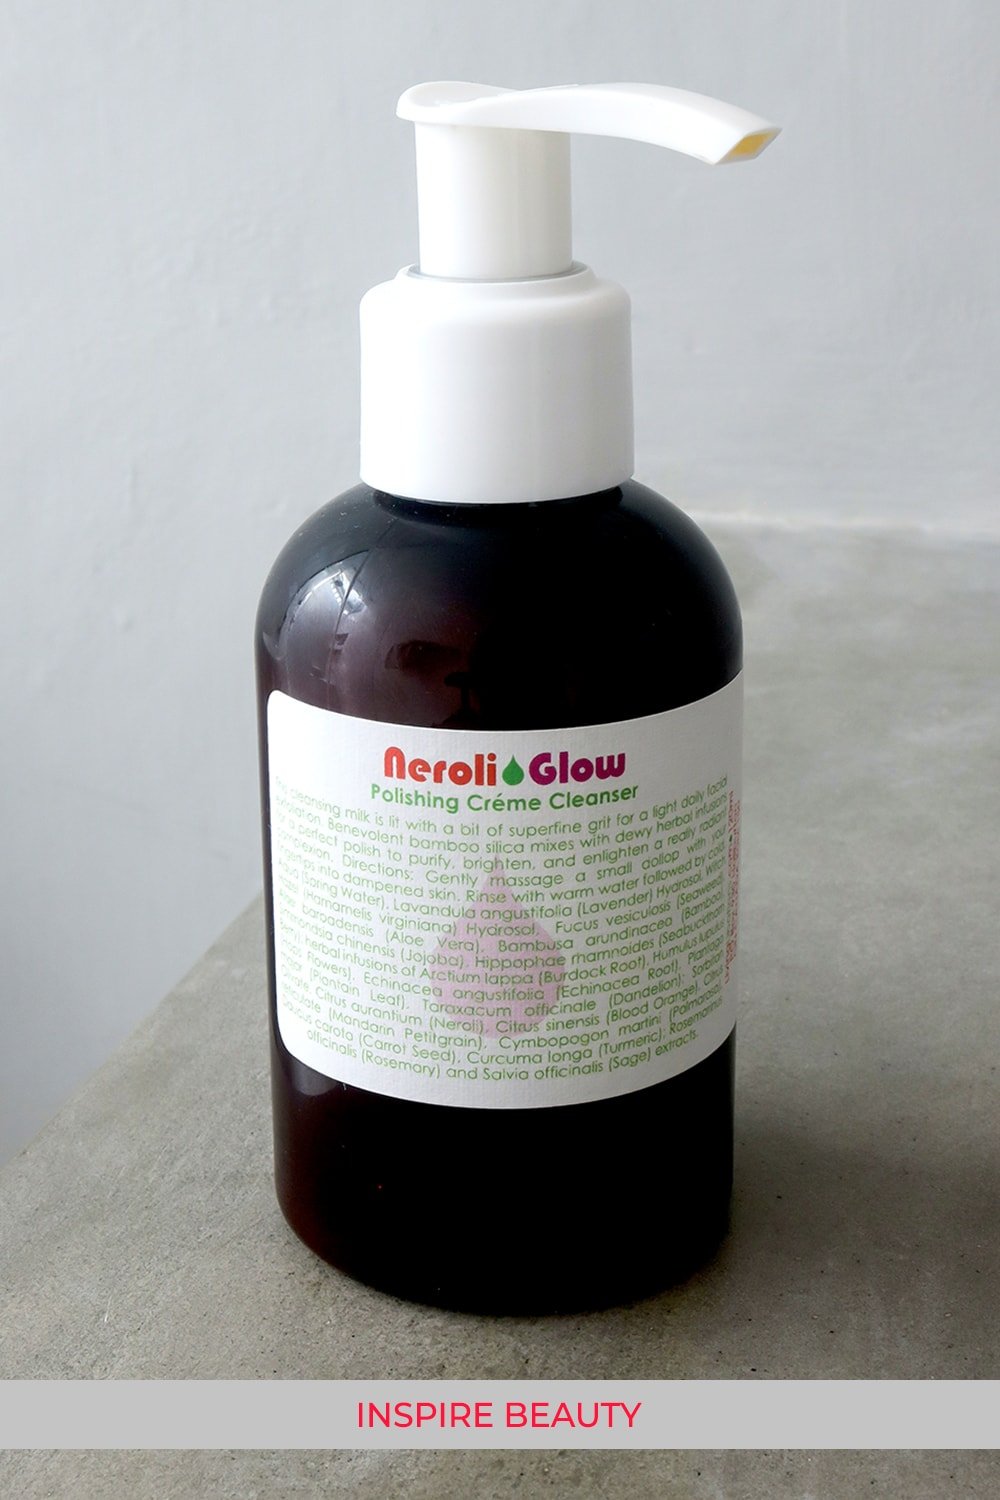 Living Libations Neroli Glow Polishing Creme Cleanser review